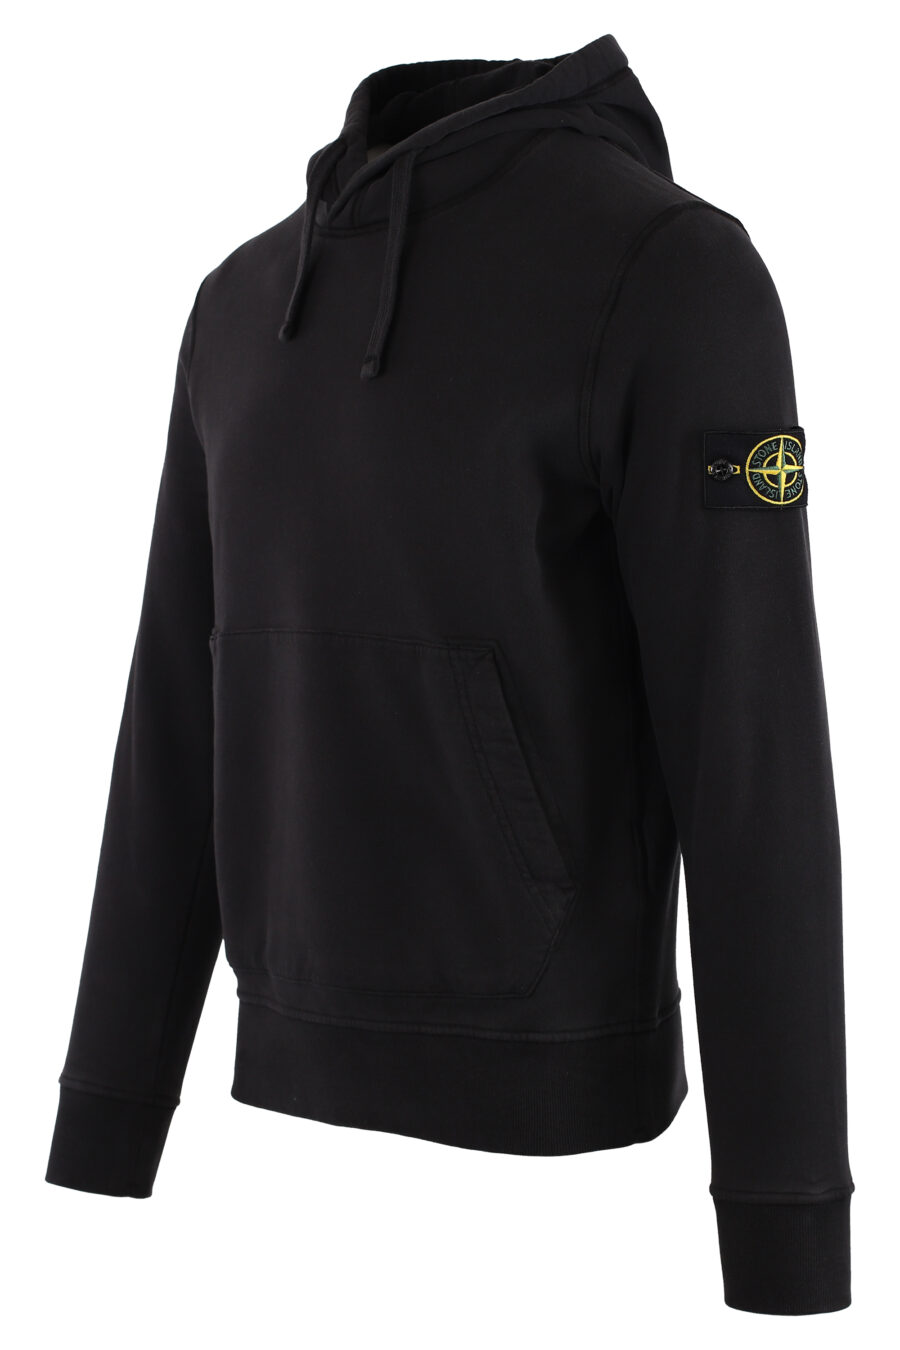 Black hooded sweatshirt with logo patch - IMG 1439